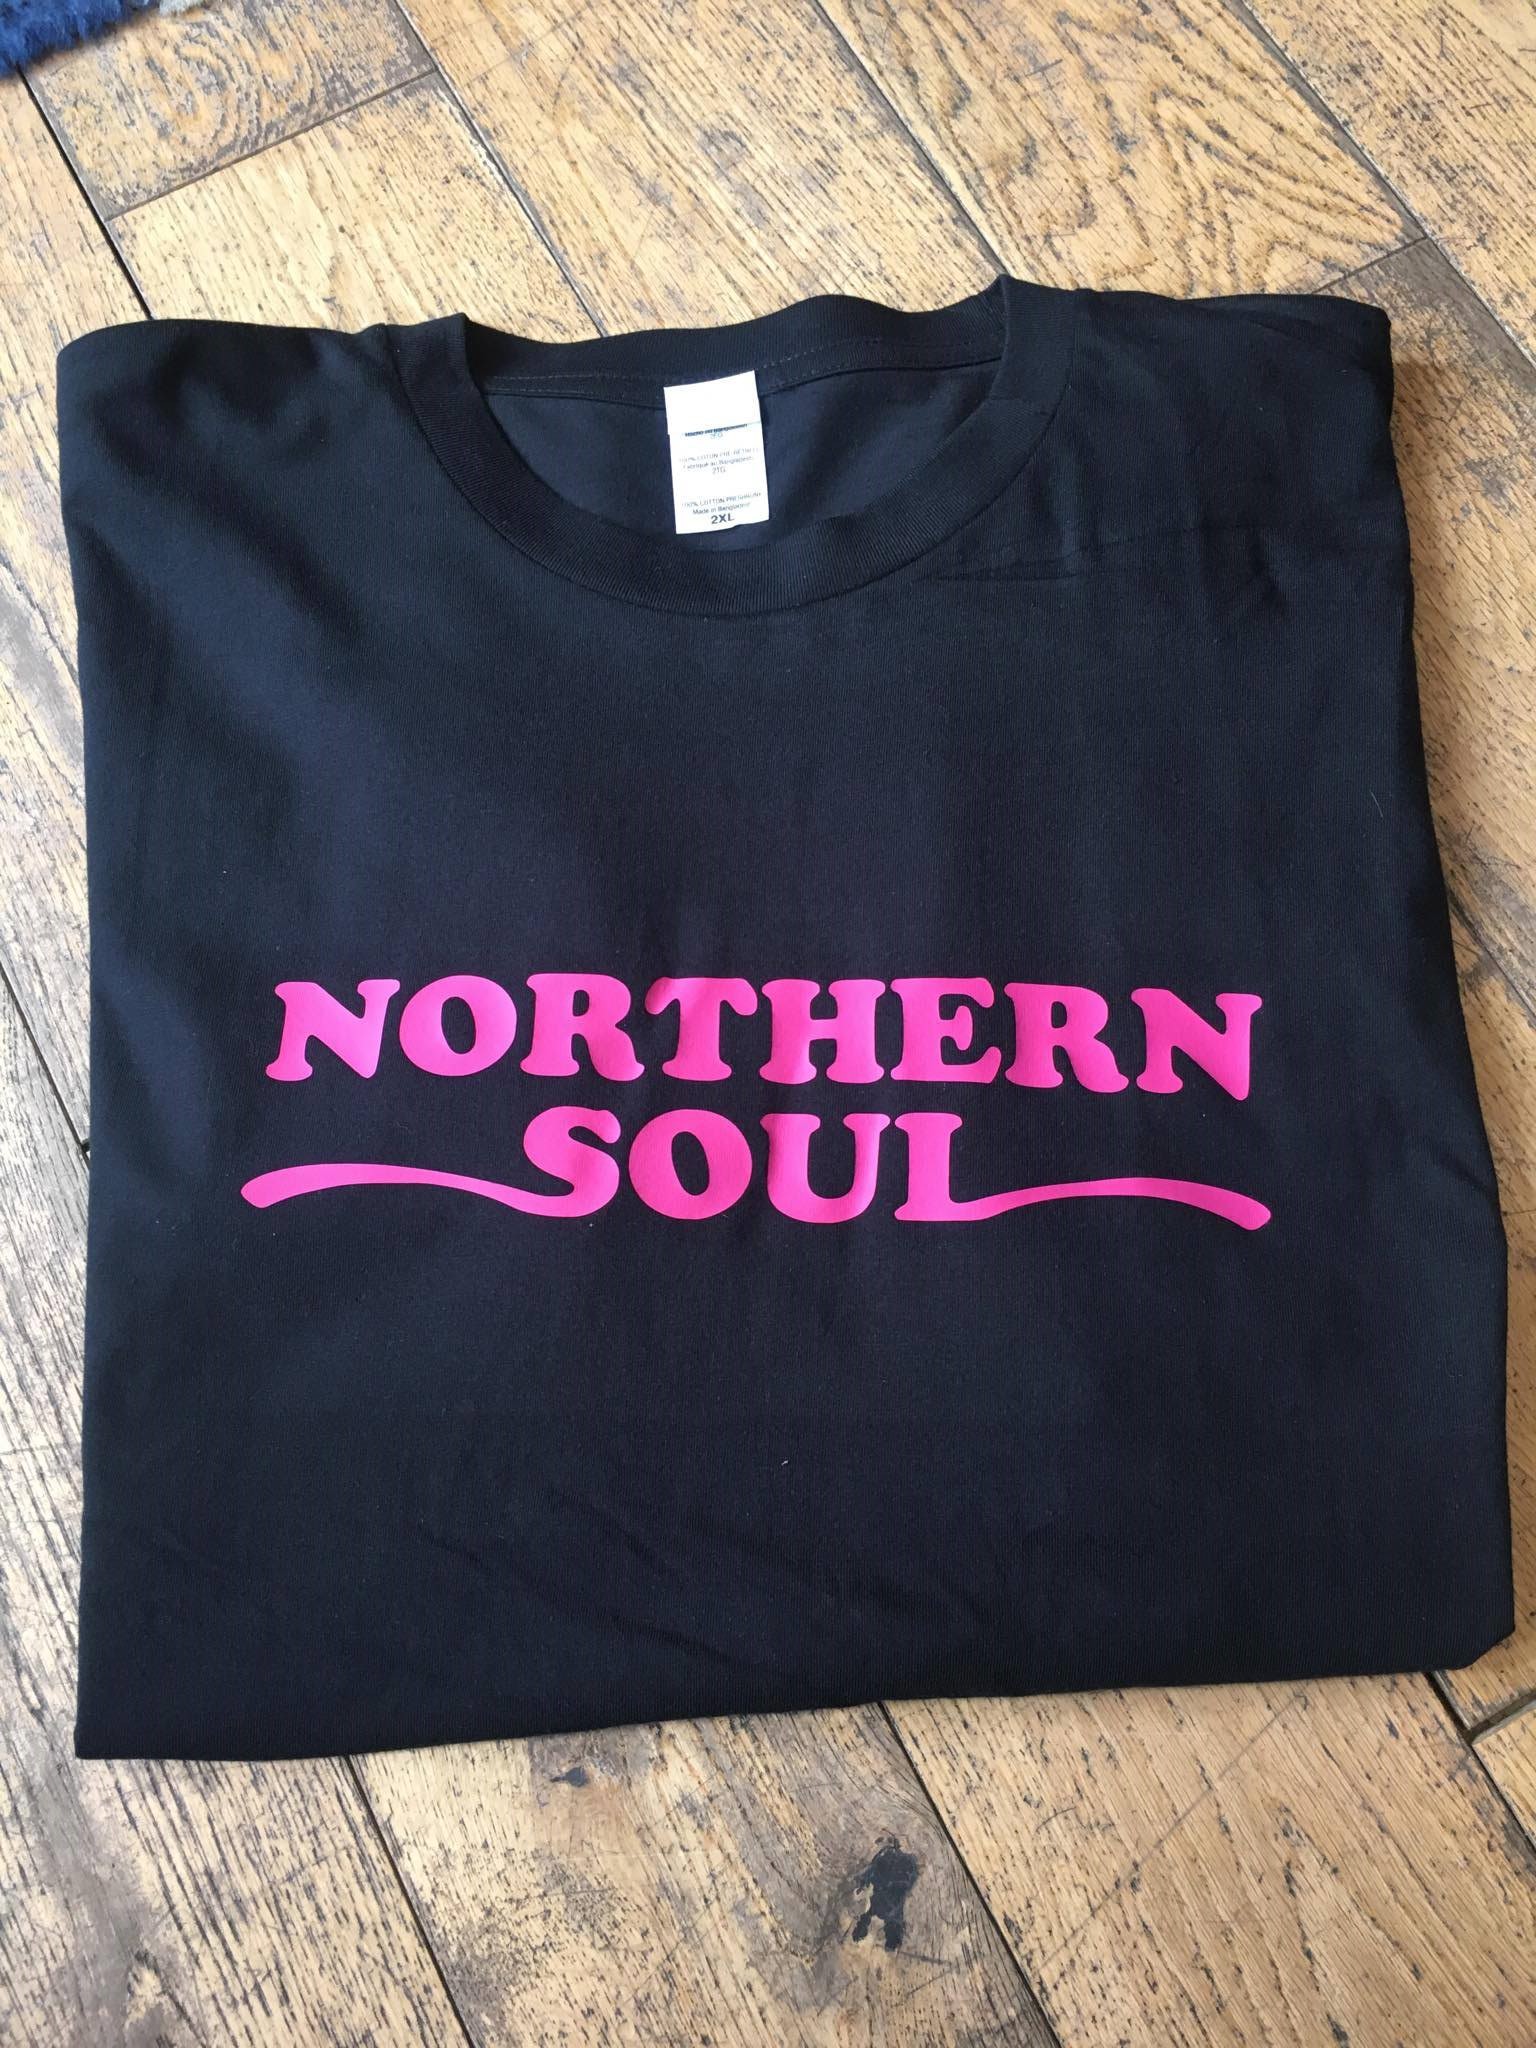 Northern Soul T-Shirt Black & Pink